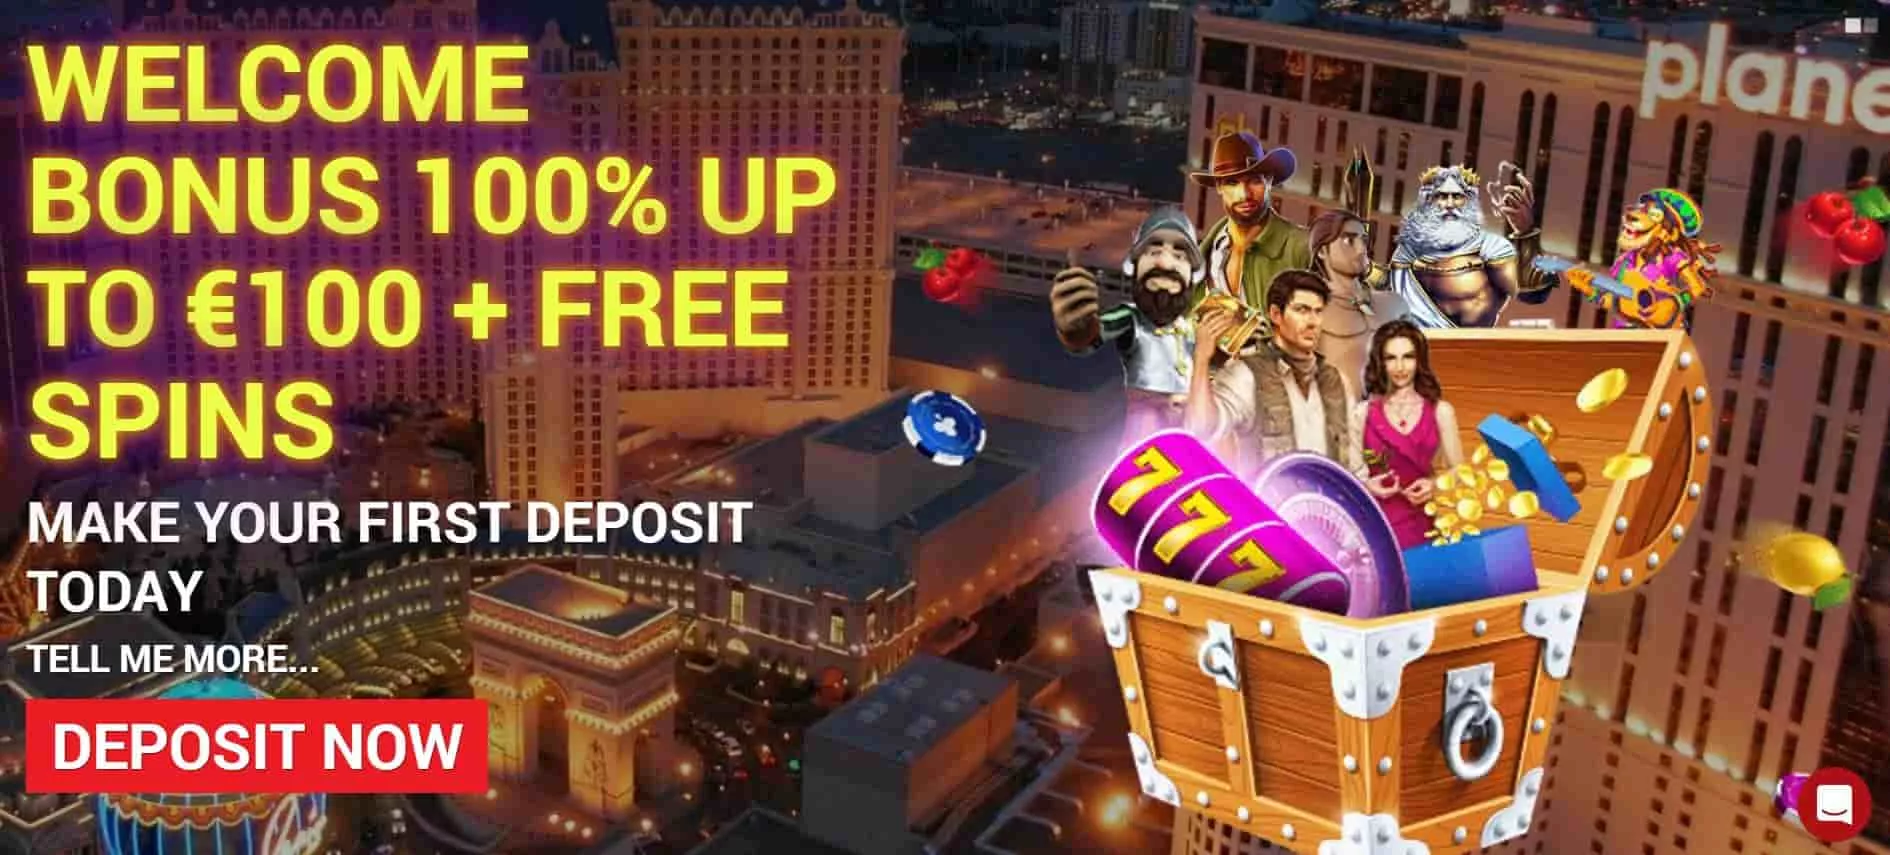 kingdomace casino welcome bonus